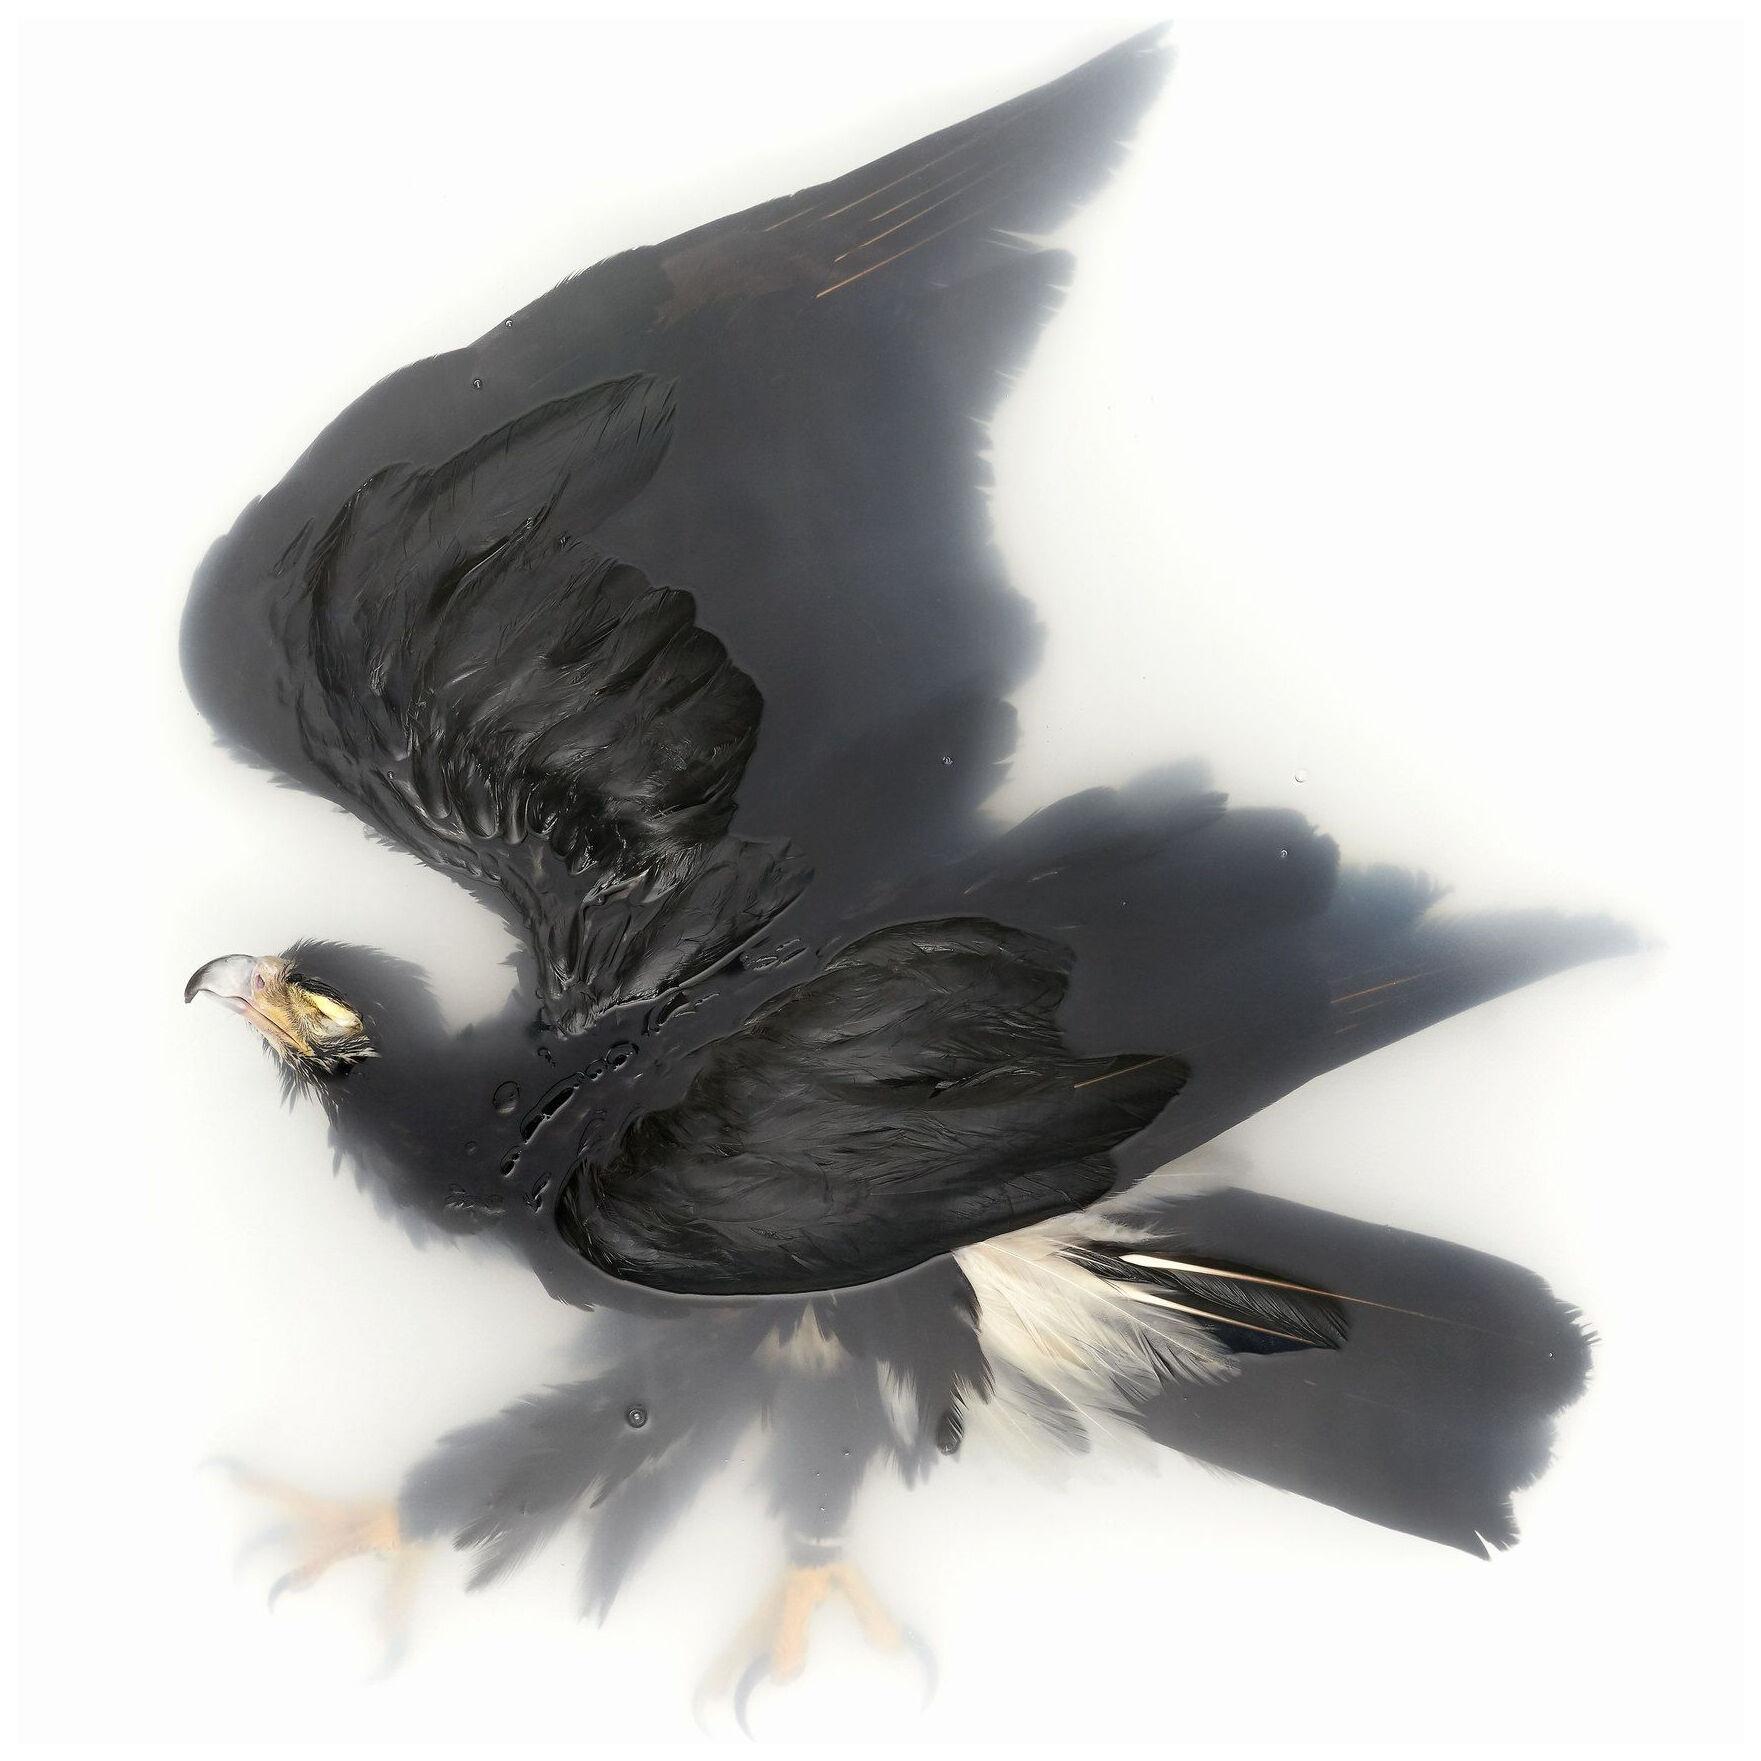 Art Print 'Unkown Pose by Blacy Eagle' by Sinke & Van Tongeren 40x40 cm